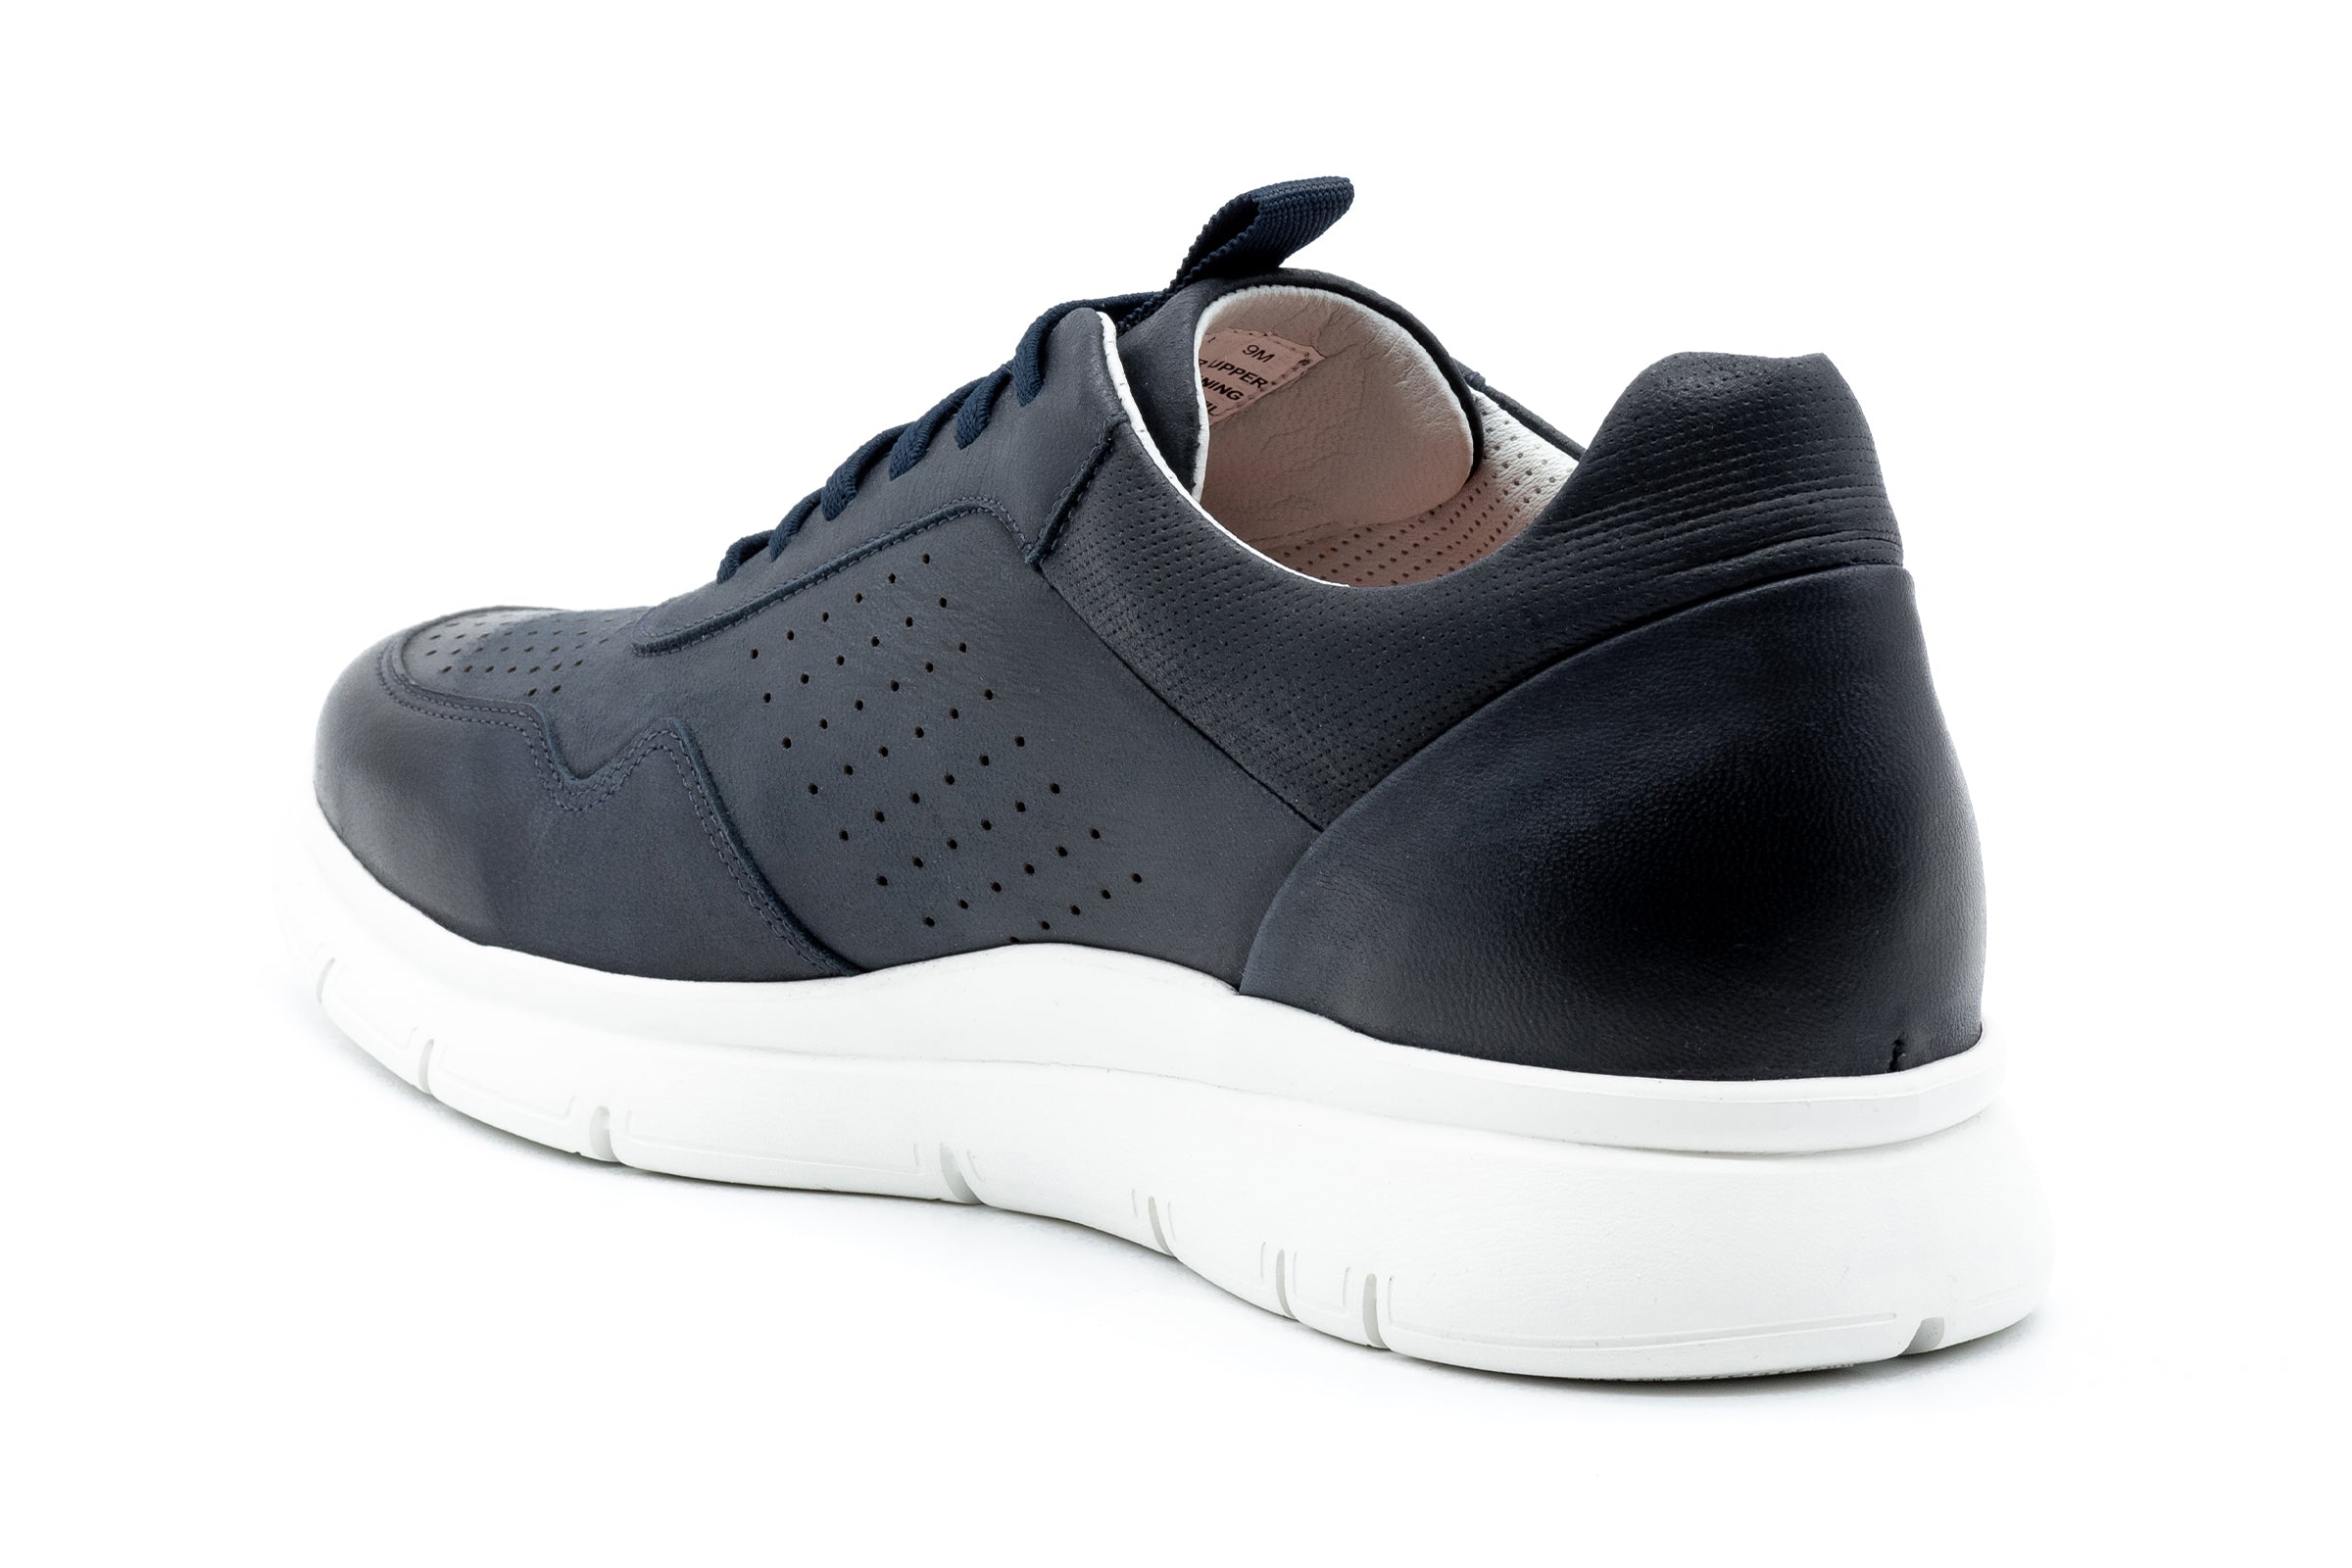 Merrell Women's Trail Glove 5 Athletic Shoes - Black | elliottsboots